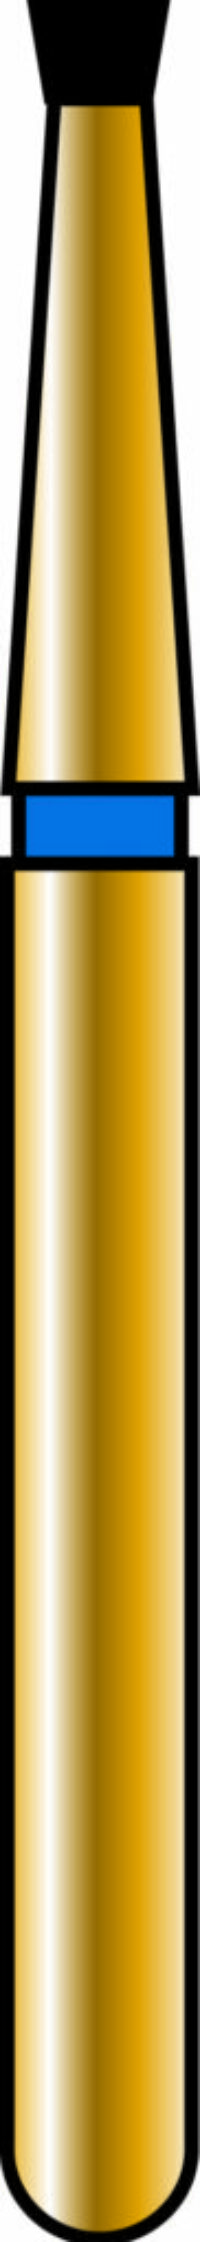 Inverted Cone 12-.9mm Gold Diamond Bur - Coarse Grit